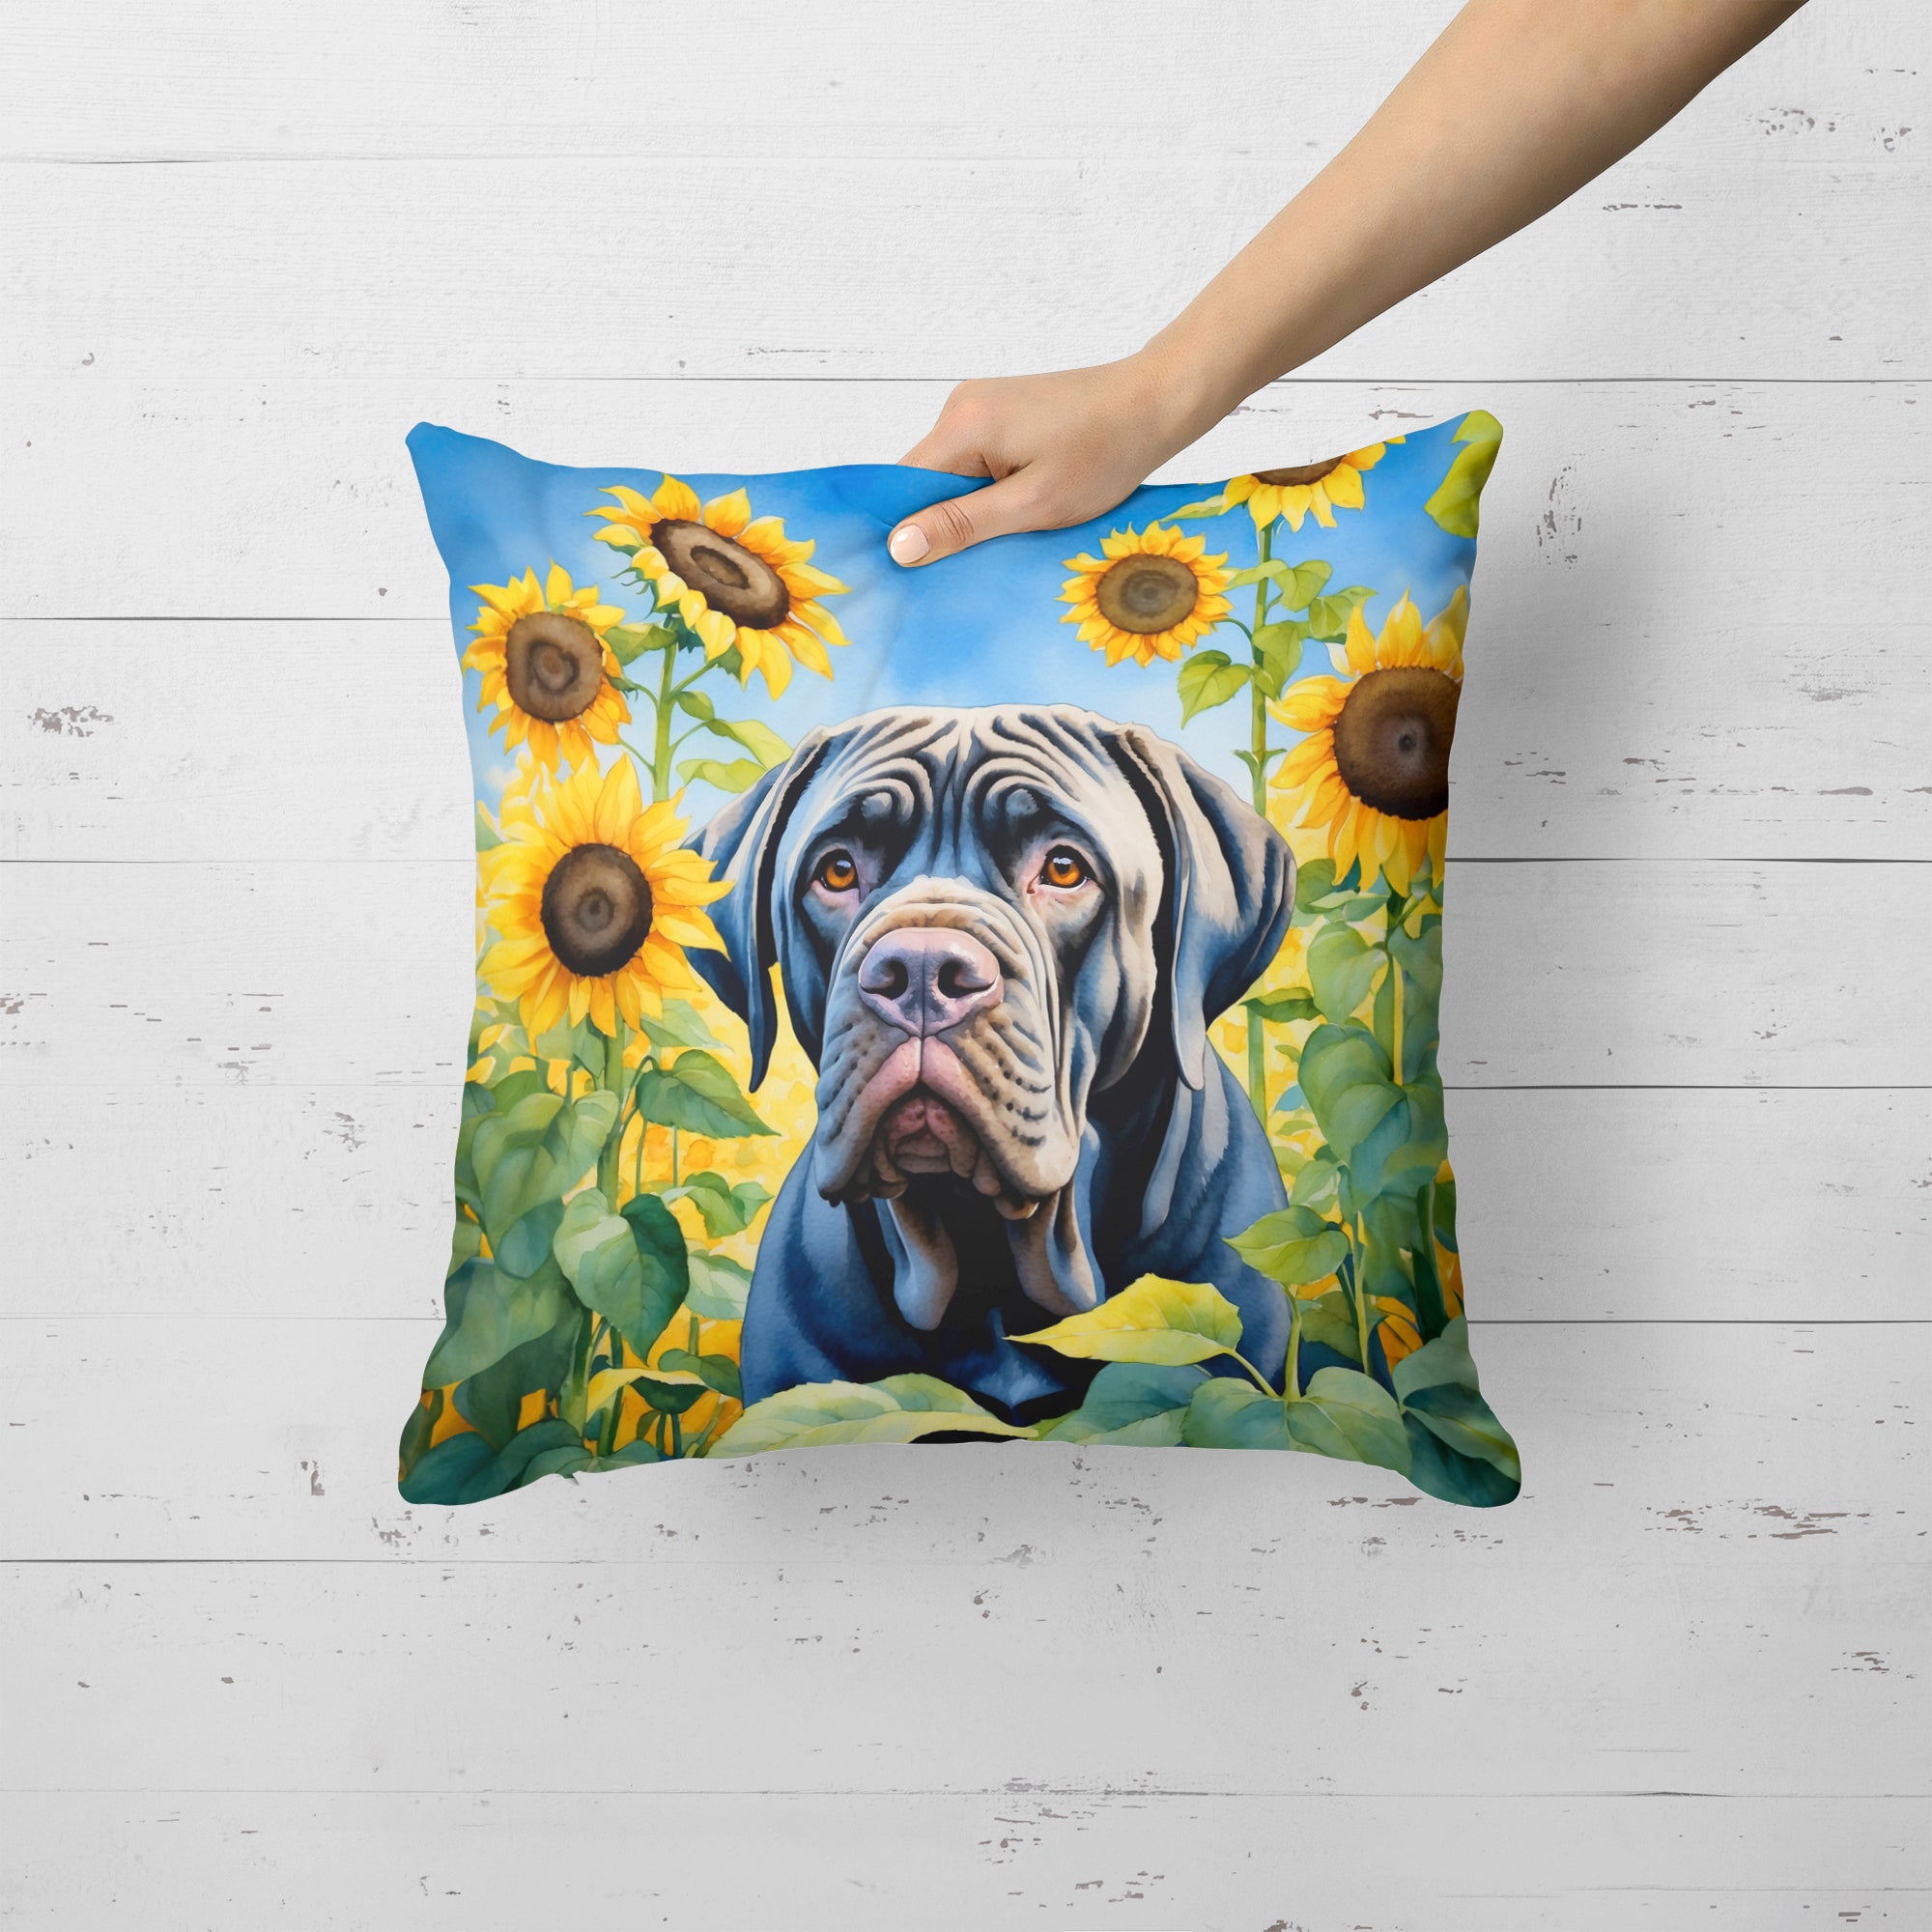 Buy this Neapolitan Mastiff in Sunflowers Throw Pillow